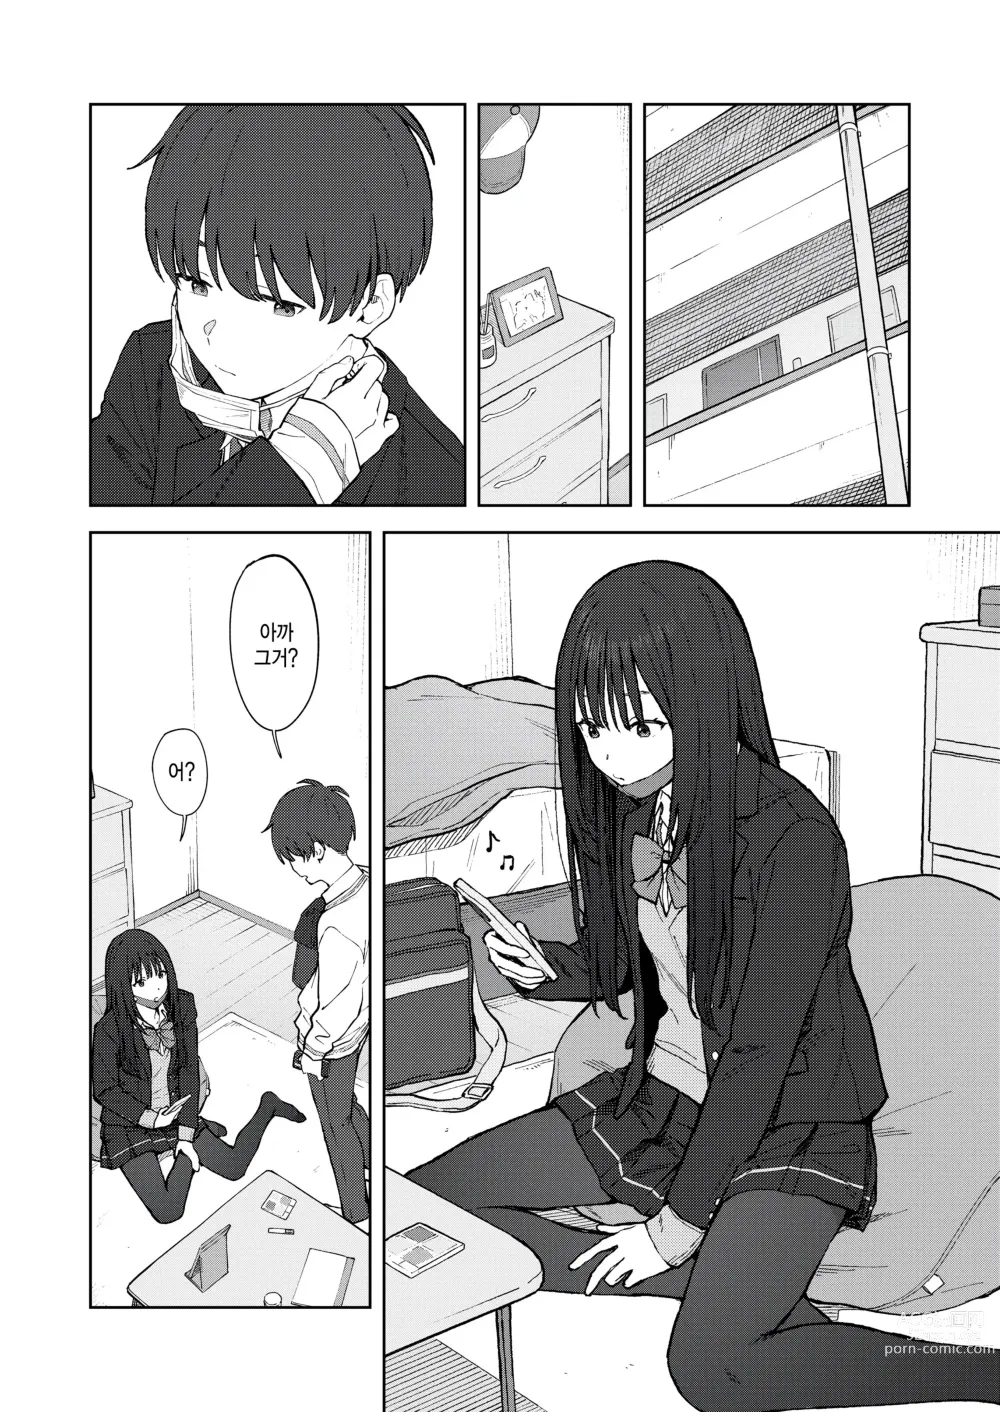 Page 4 of manga Camera Roll ni wa Nokoranai